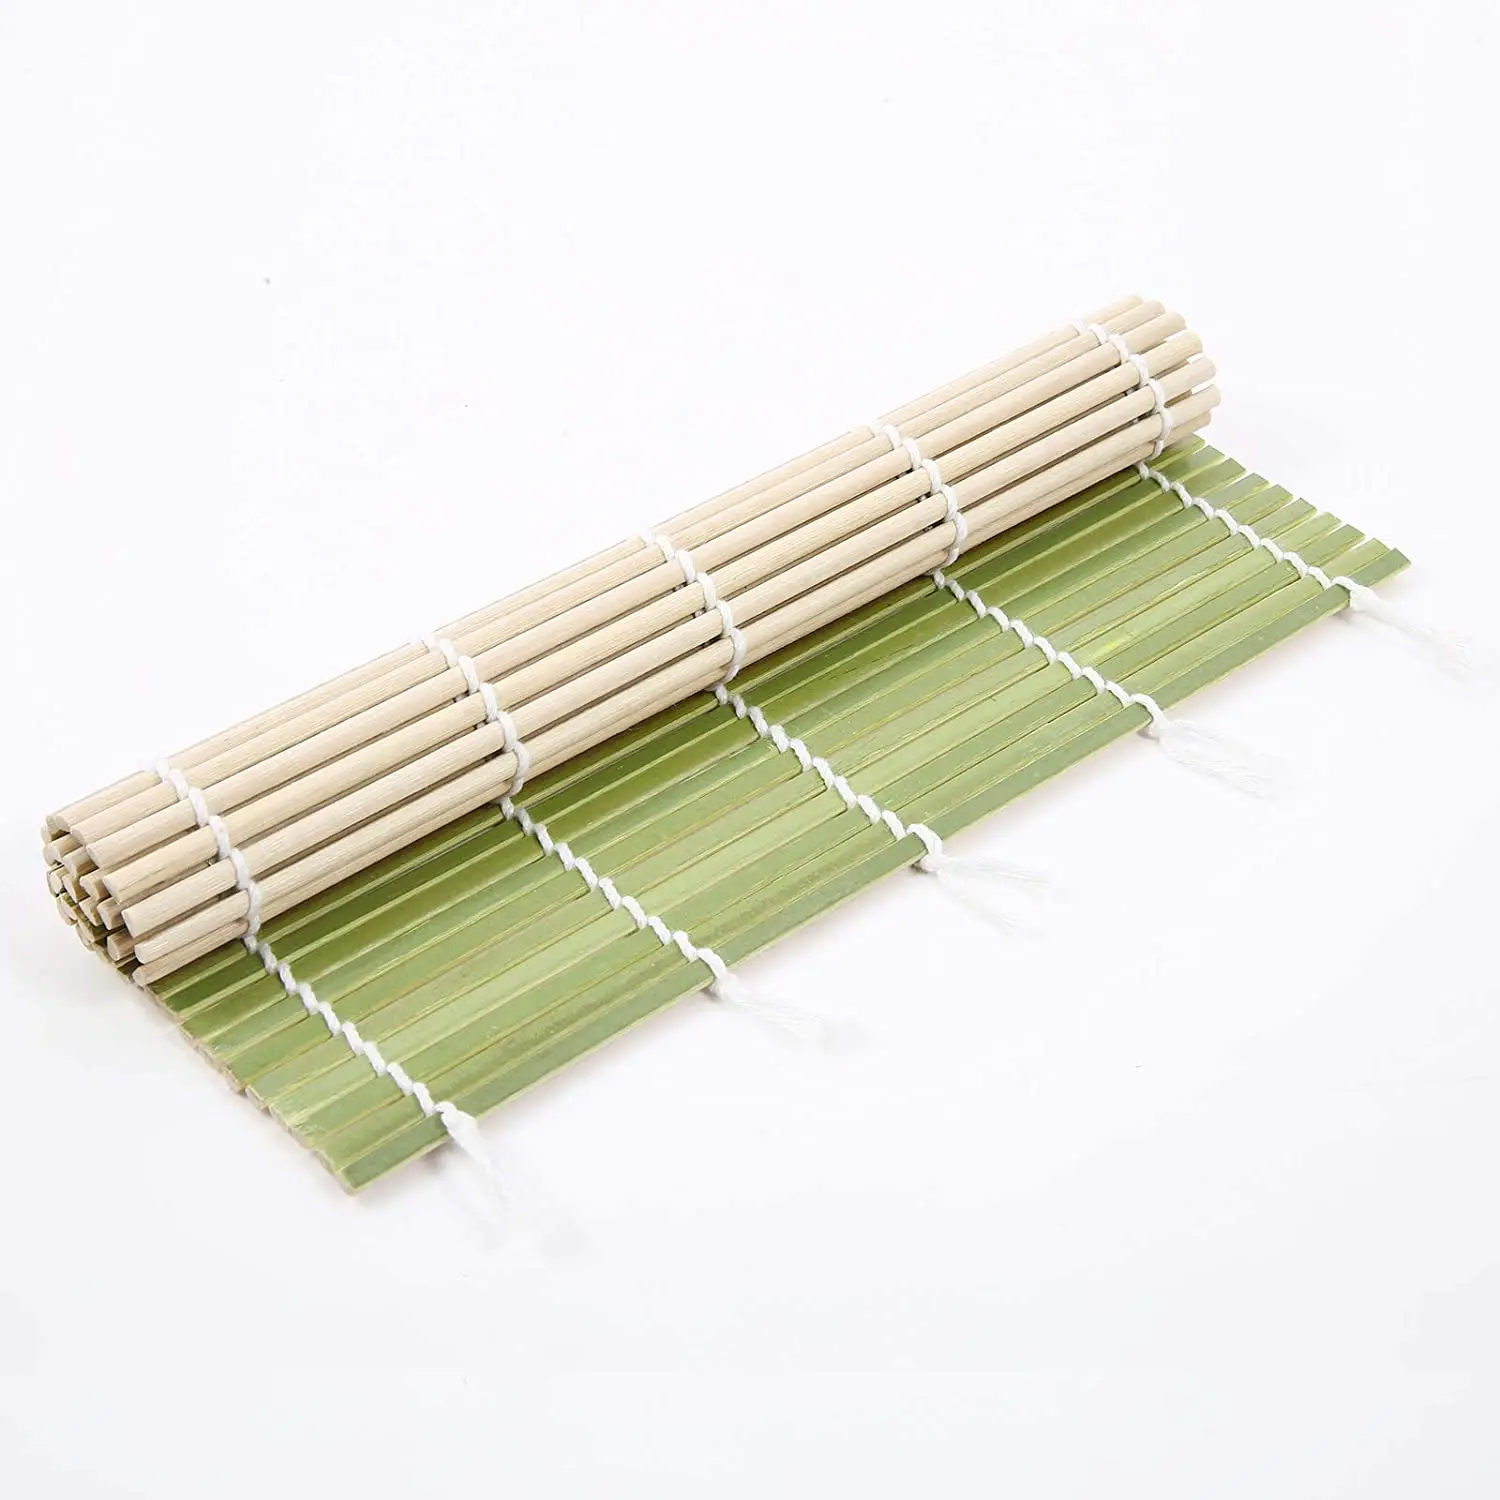 https://ae01.alicdn.com/kf/Sbaf1986933314c40bdb65d270010733f6/Natural-Bamboo-Sushi-Mat-9-5-inches-Green-Bamboo-Sushi-Rolling-Mat-Square-Sushi-Roller-Sushi.jpg